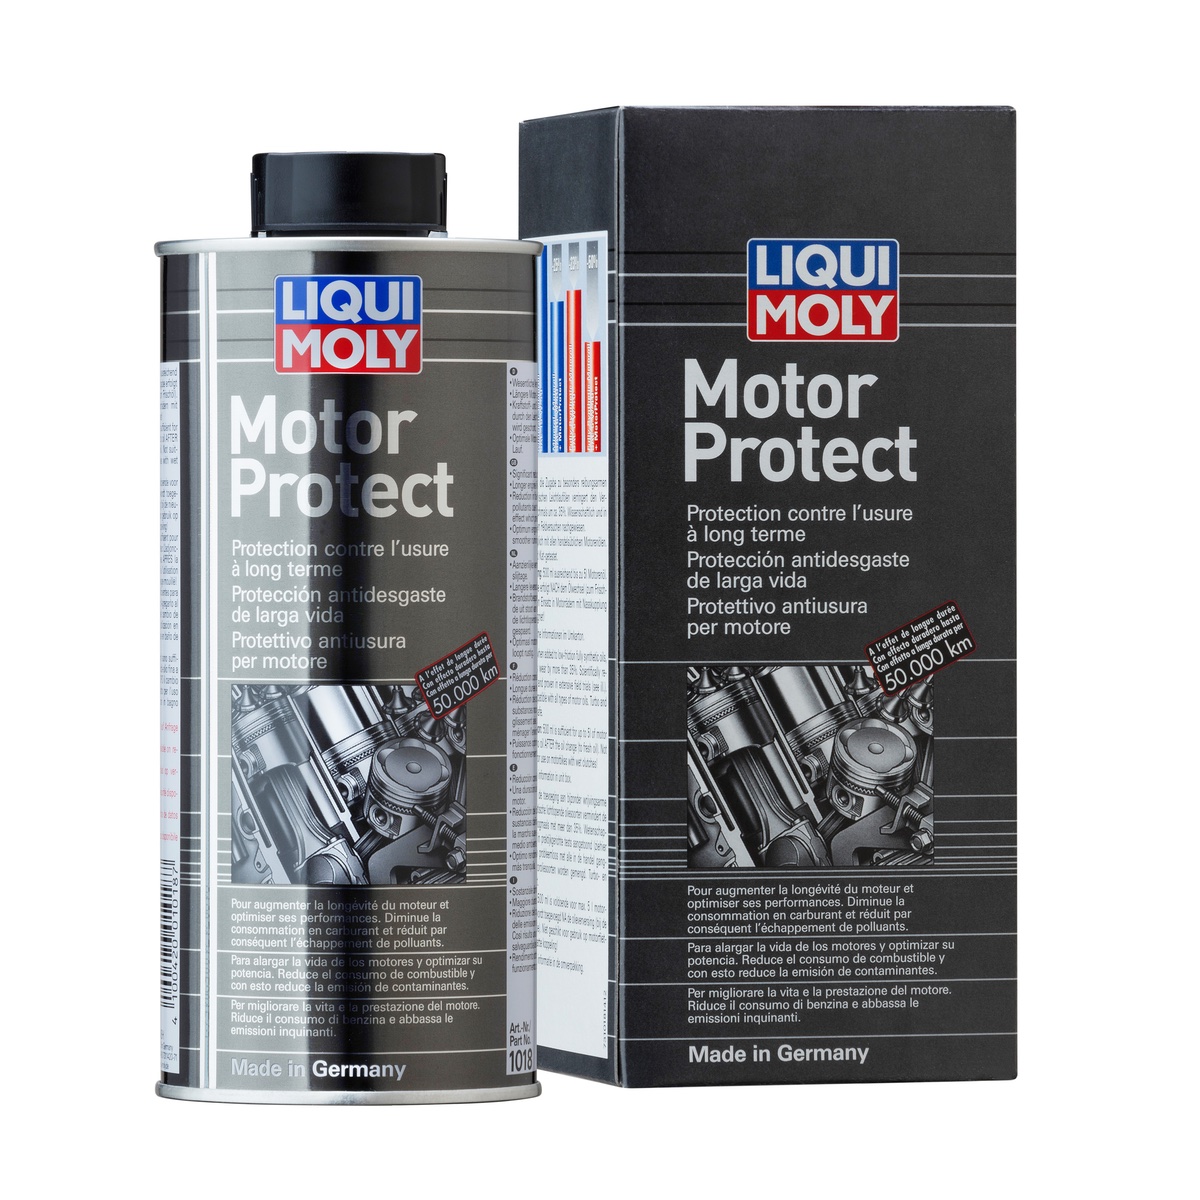 LIQUI MOLY Motor Protect Sentetik Yağ Katkısı 500 ml (1018)